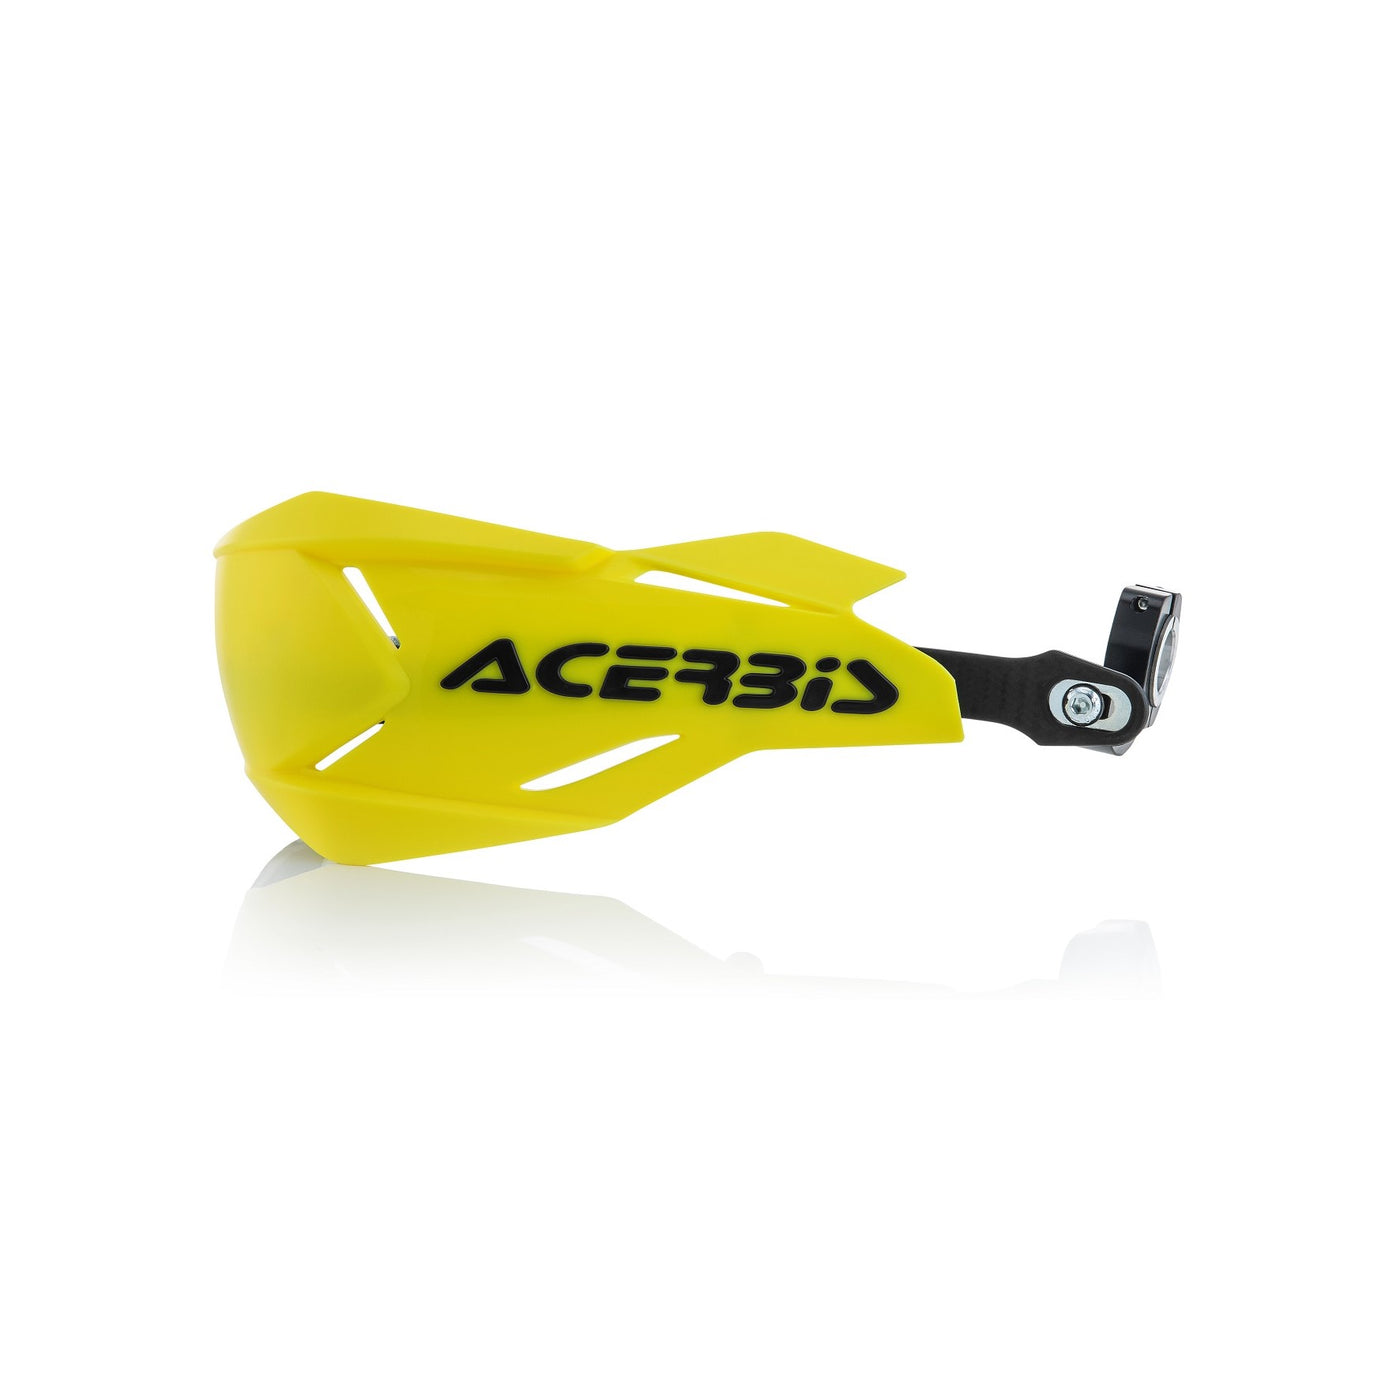 Acerbis X-Factory Yellow / Black Handguards